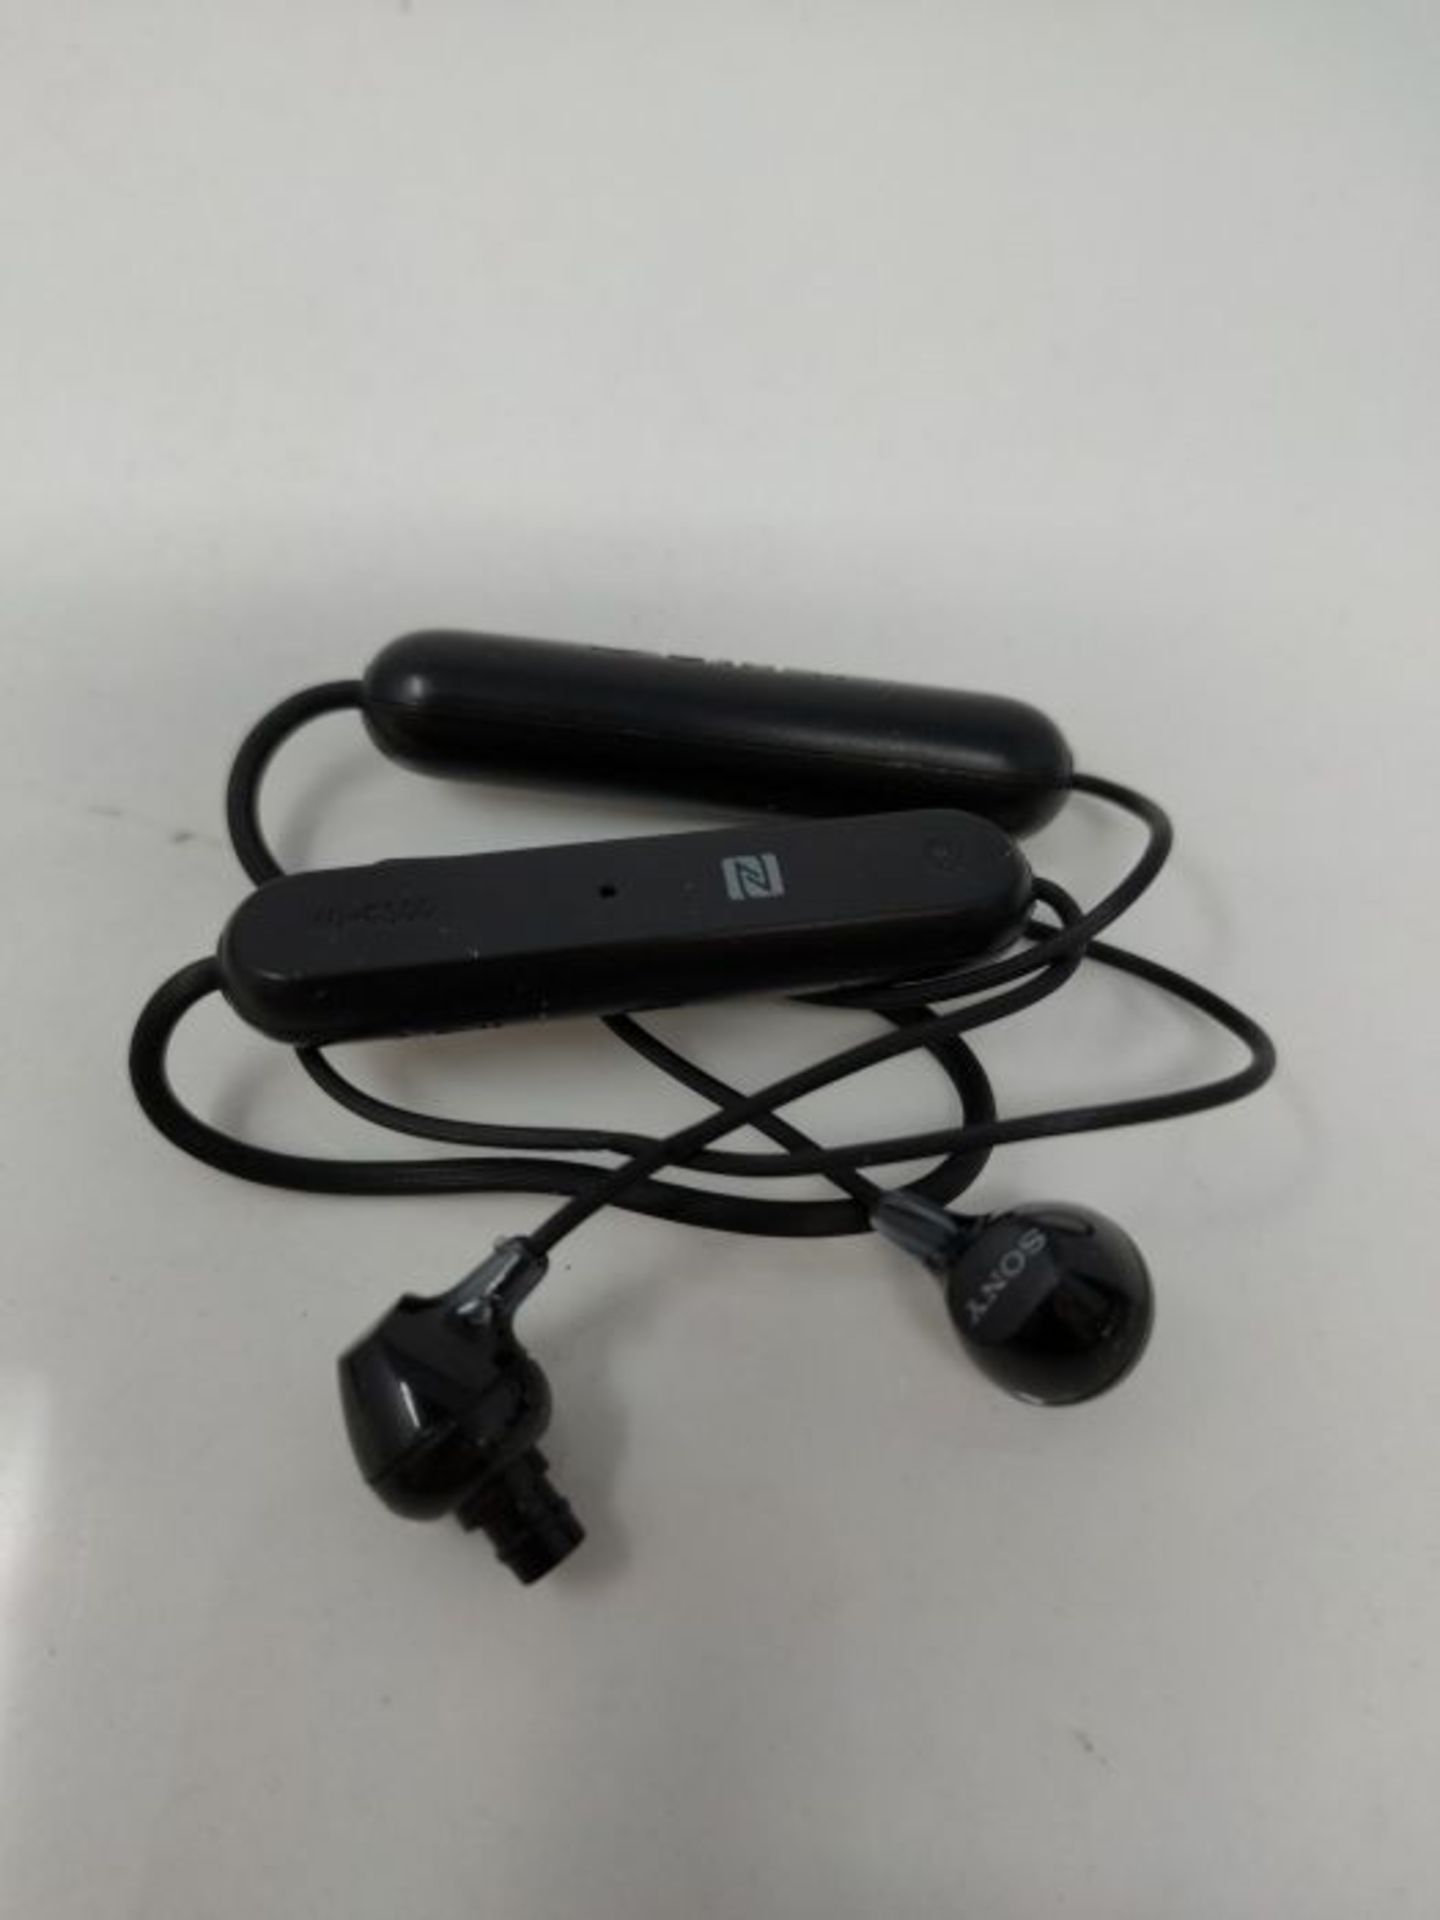 Sony WI-C300 Intrauricolare senza Fili, Bluetooth, Nero - Image 3 of 6